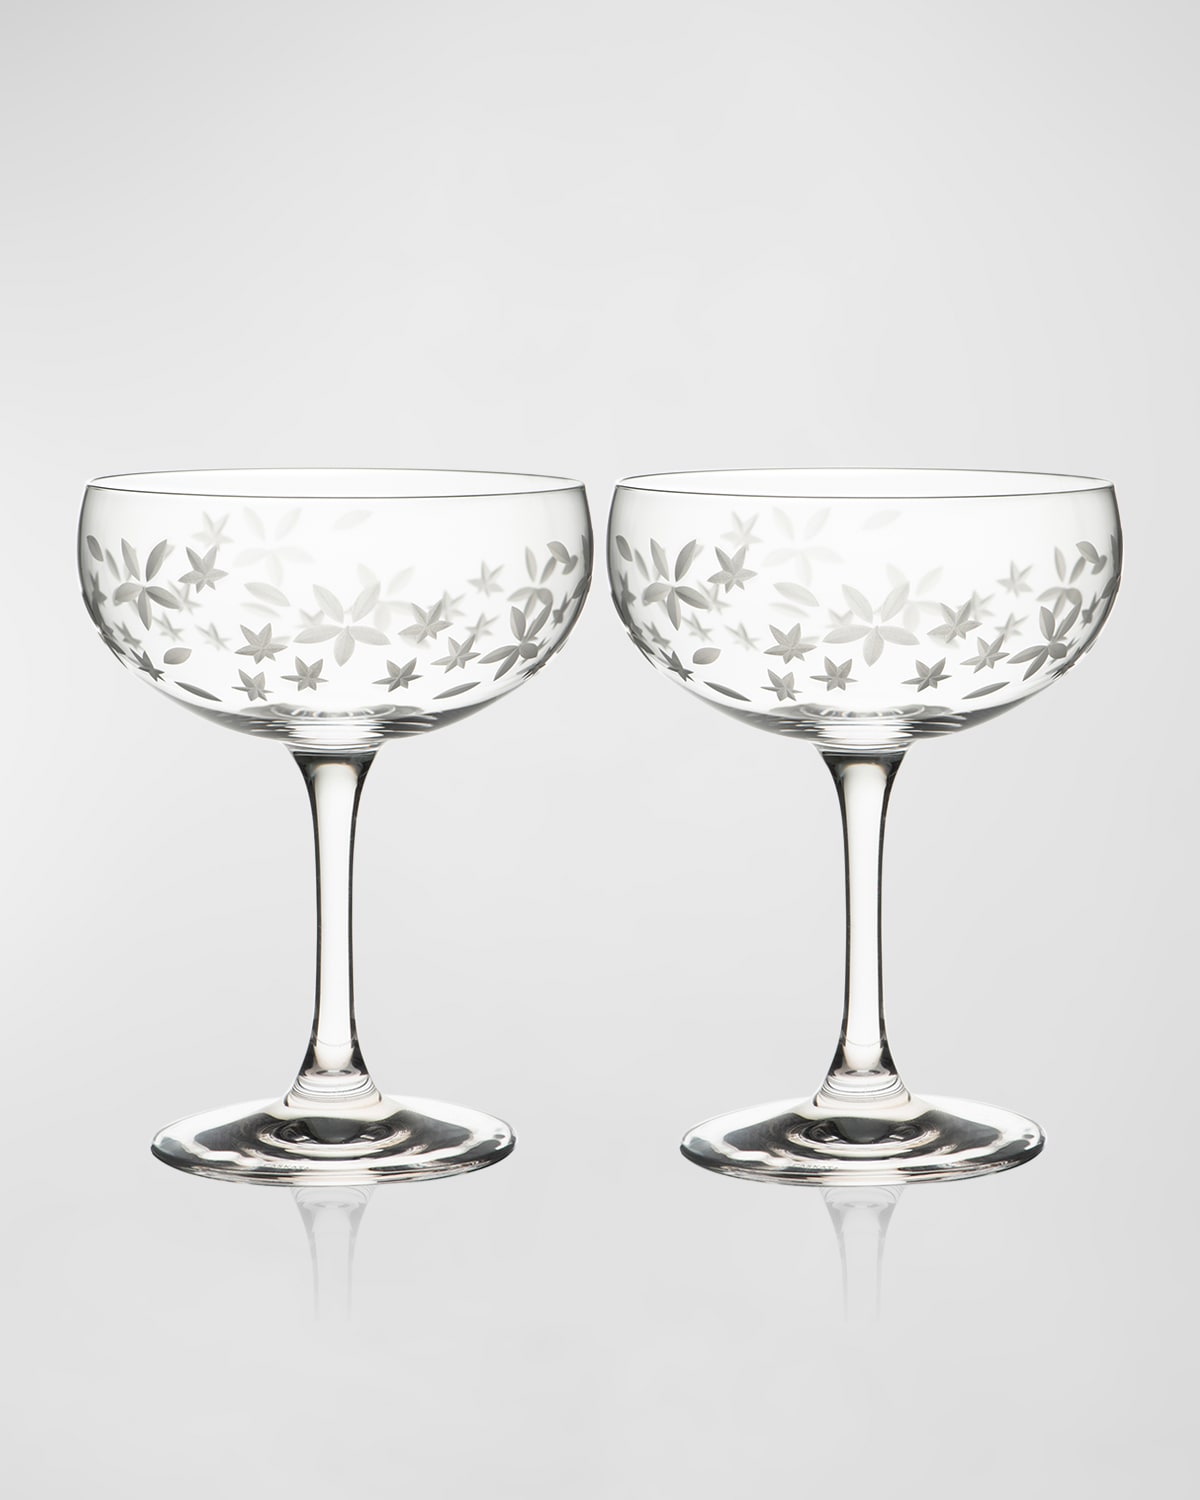 Caskata Chatham Bloom Coupe Cocktail Glasses, Set Of 2